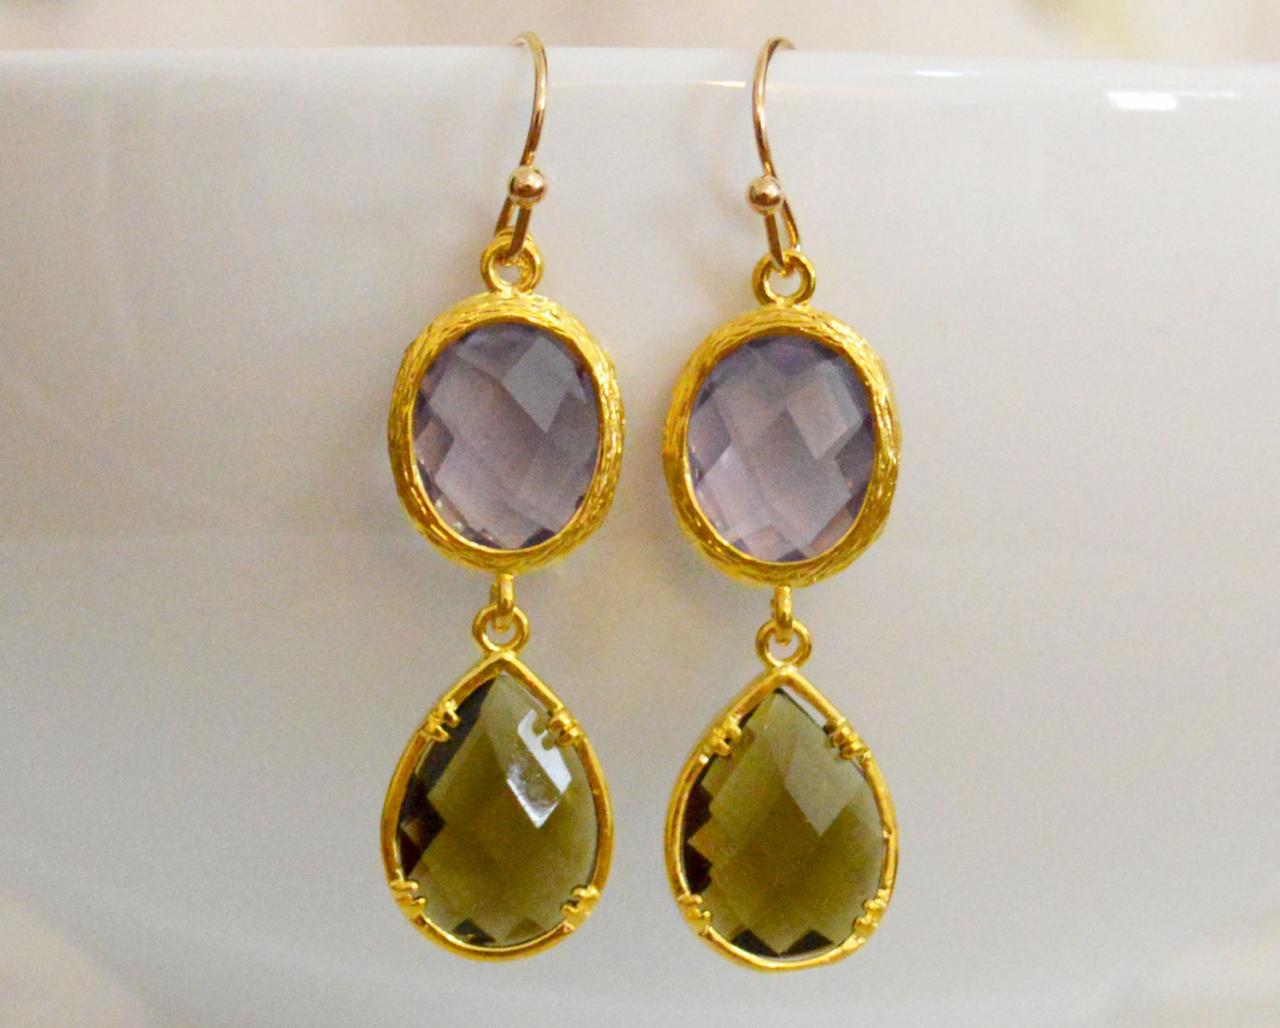 ) B-034 Glass Earrings, Tanzanite & Morion Drop Earrings, Dangle Earrings, Gold Plated Earrings/bridesmaid Gifts/everyday Jewelry/